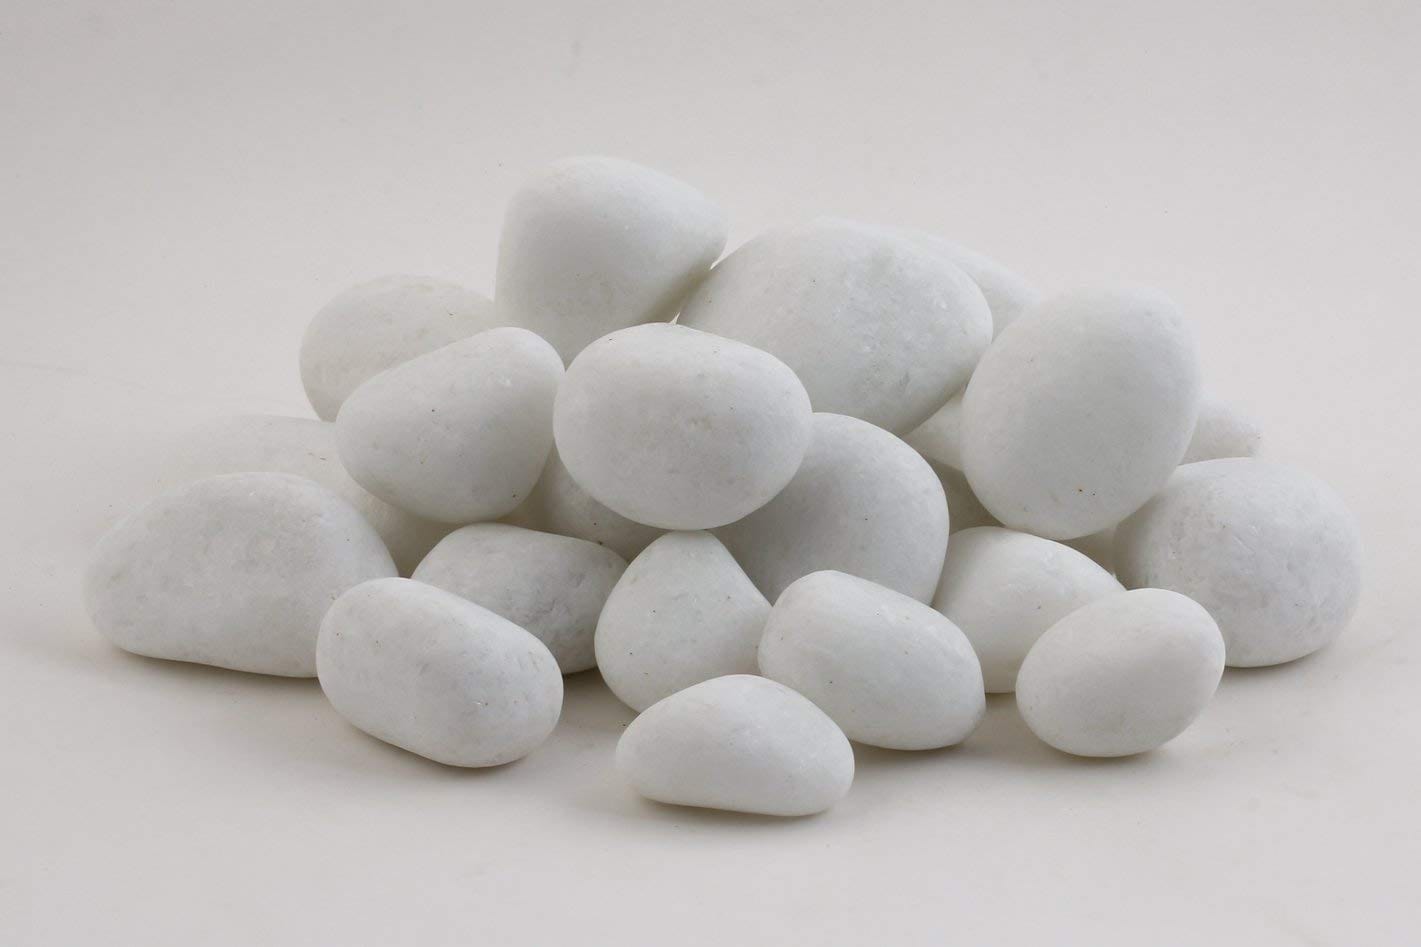 StonesForever Snow-White Stones (15 Kgs, 1-2 Inches)